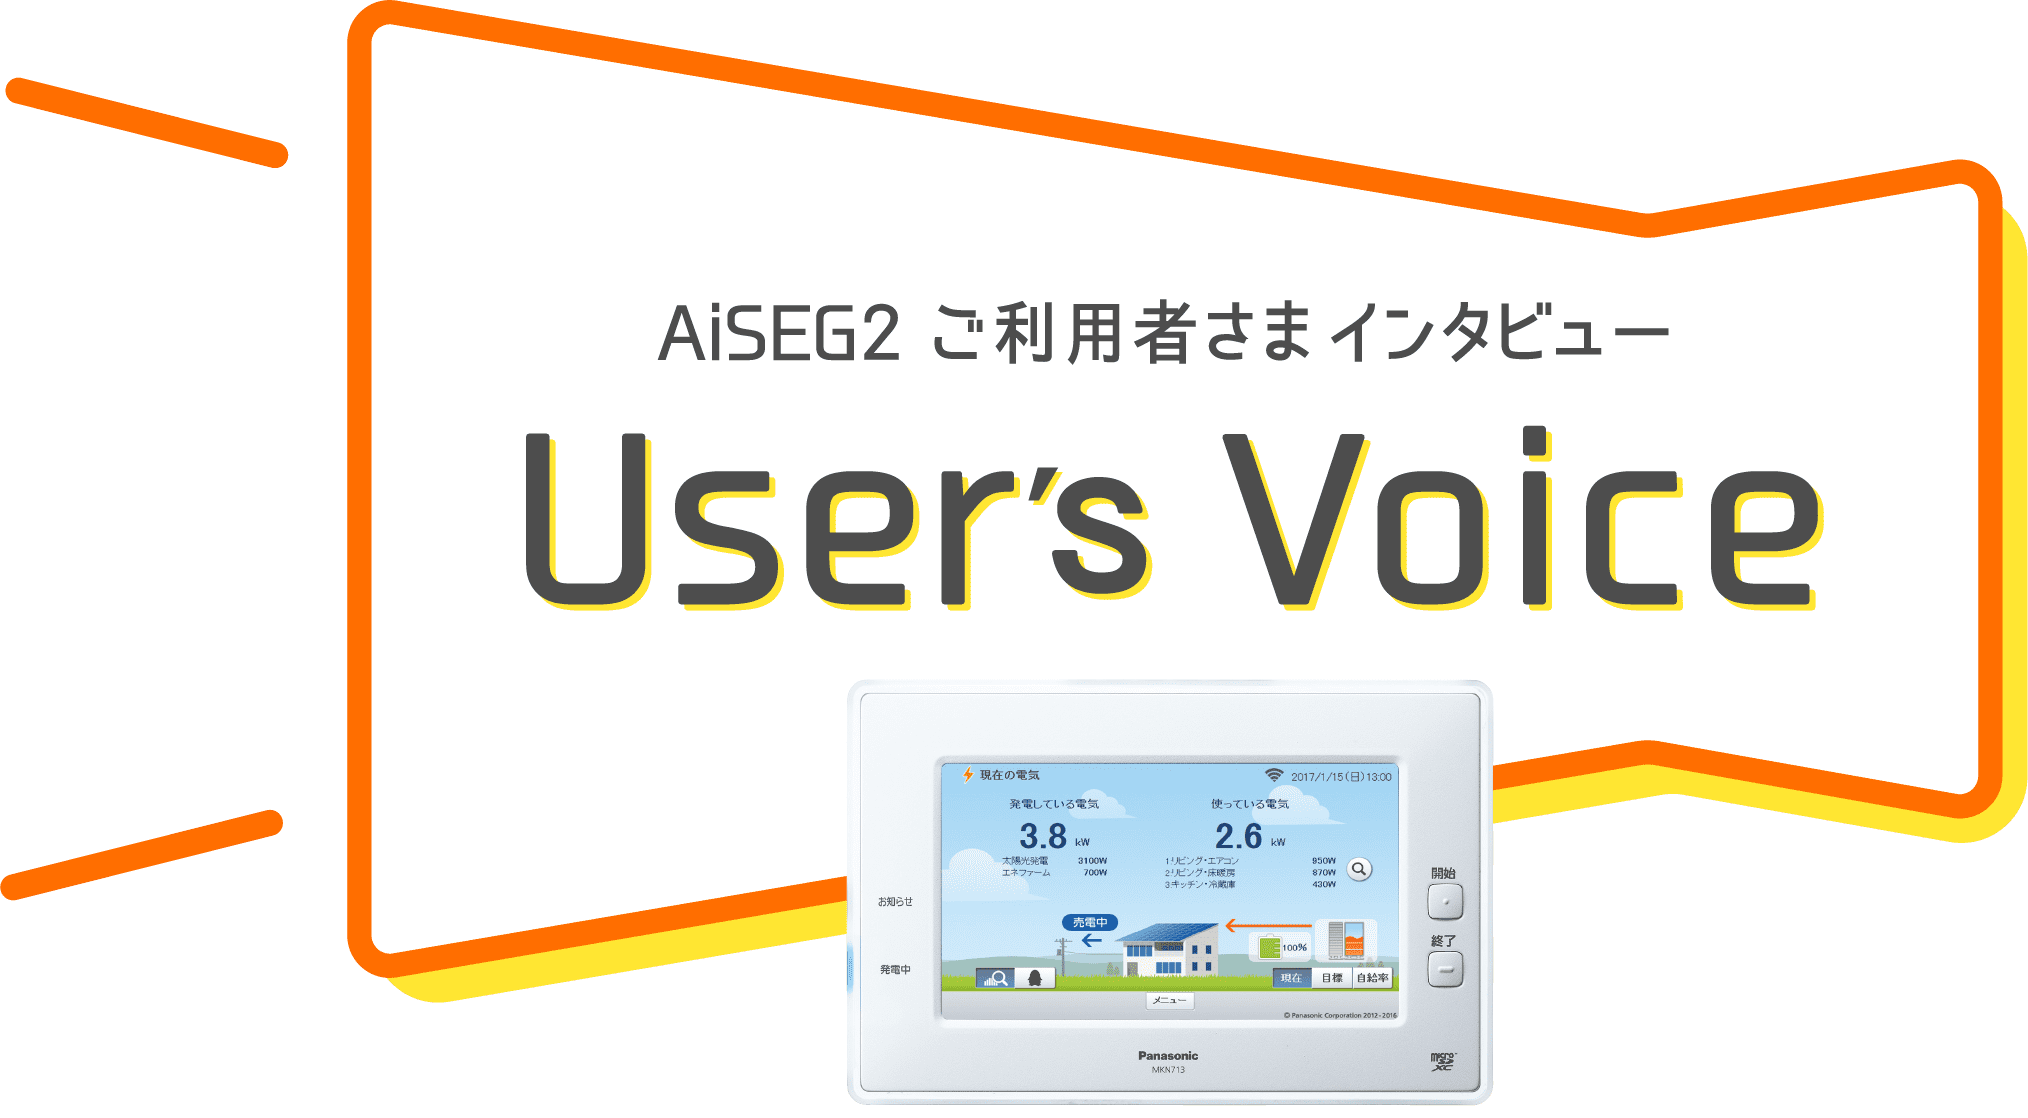 AiSEG2 ご利用者さまインタビュー User's Voice